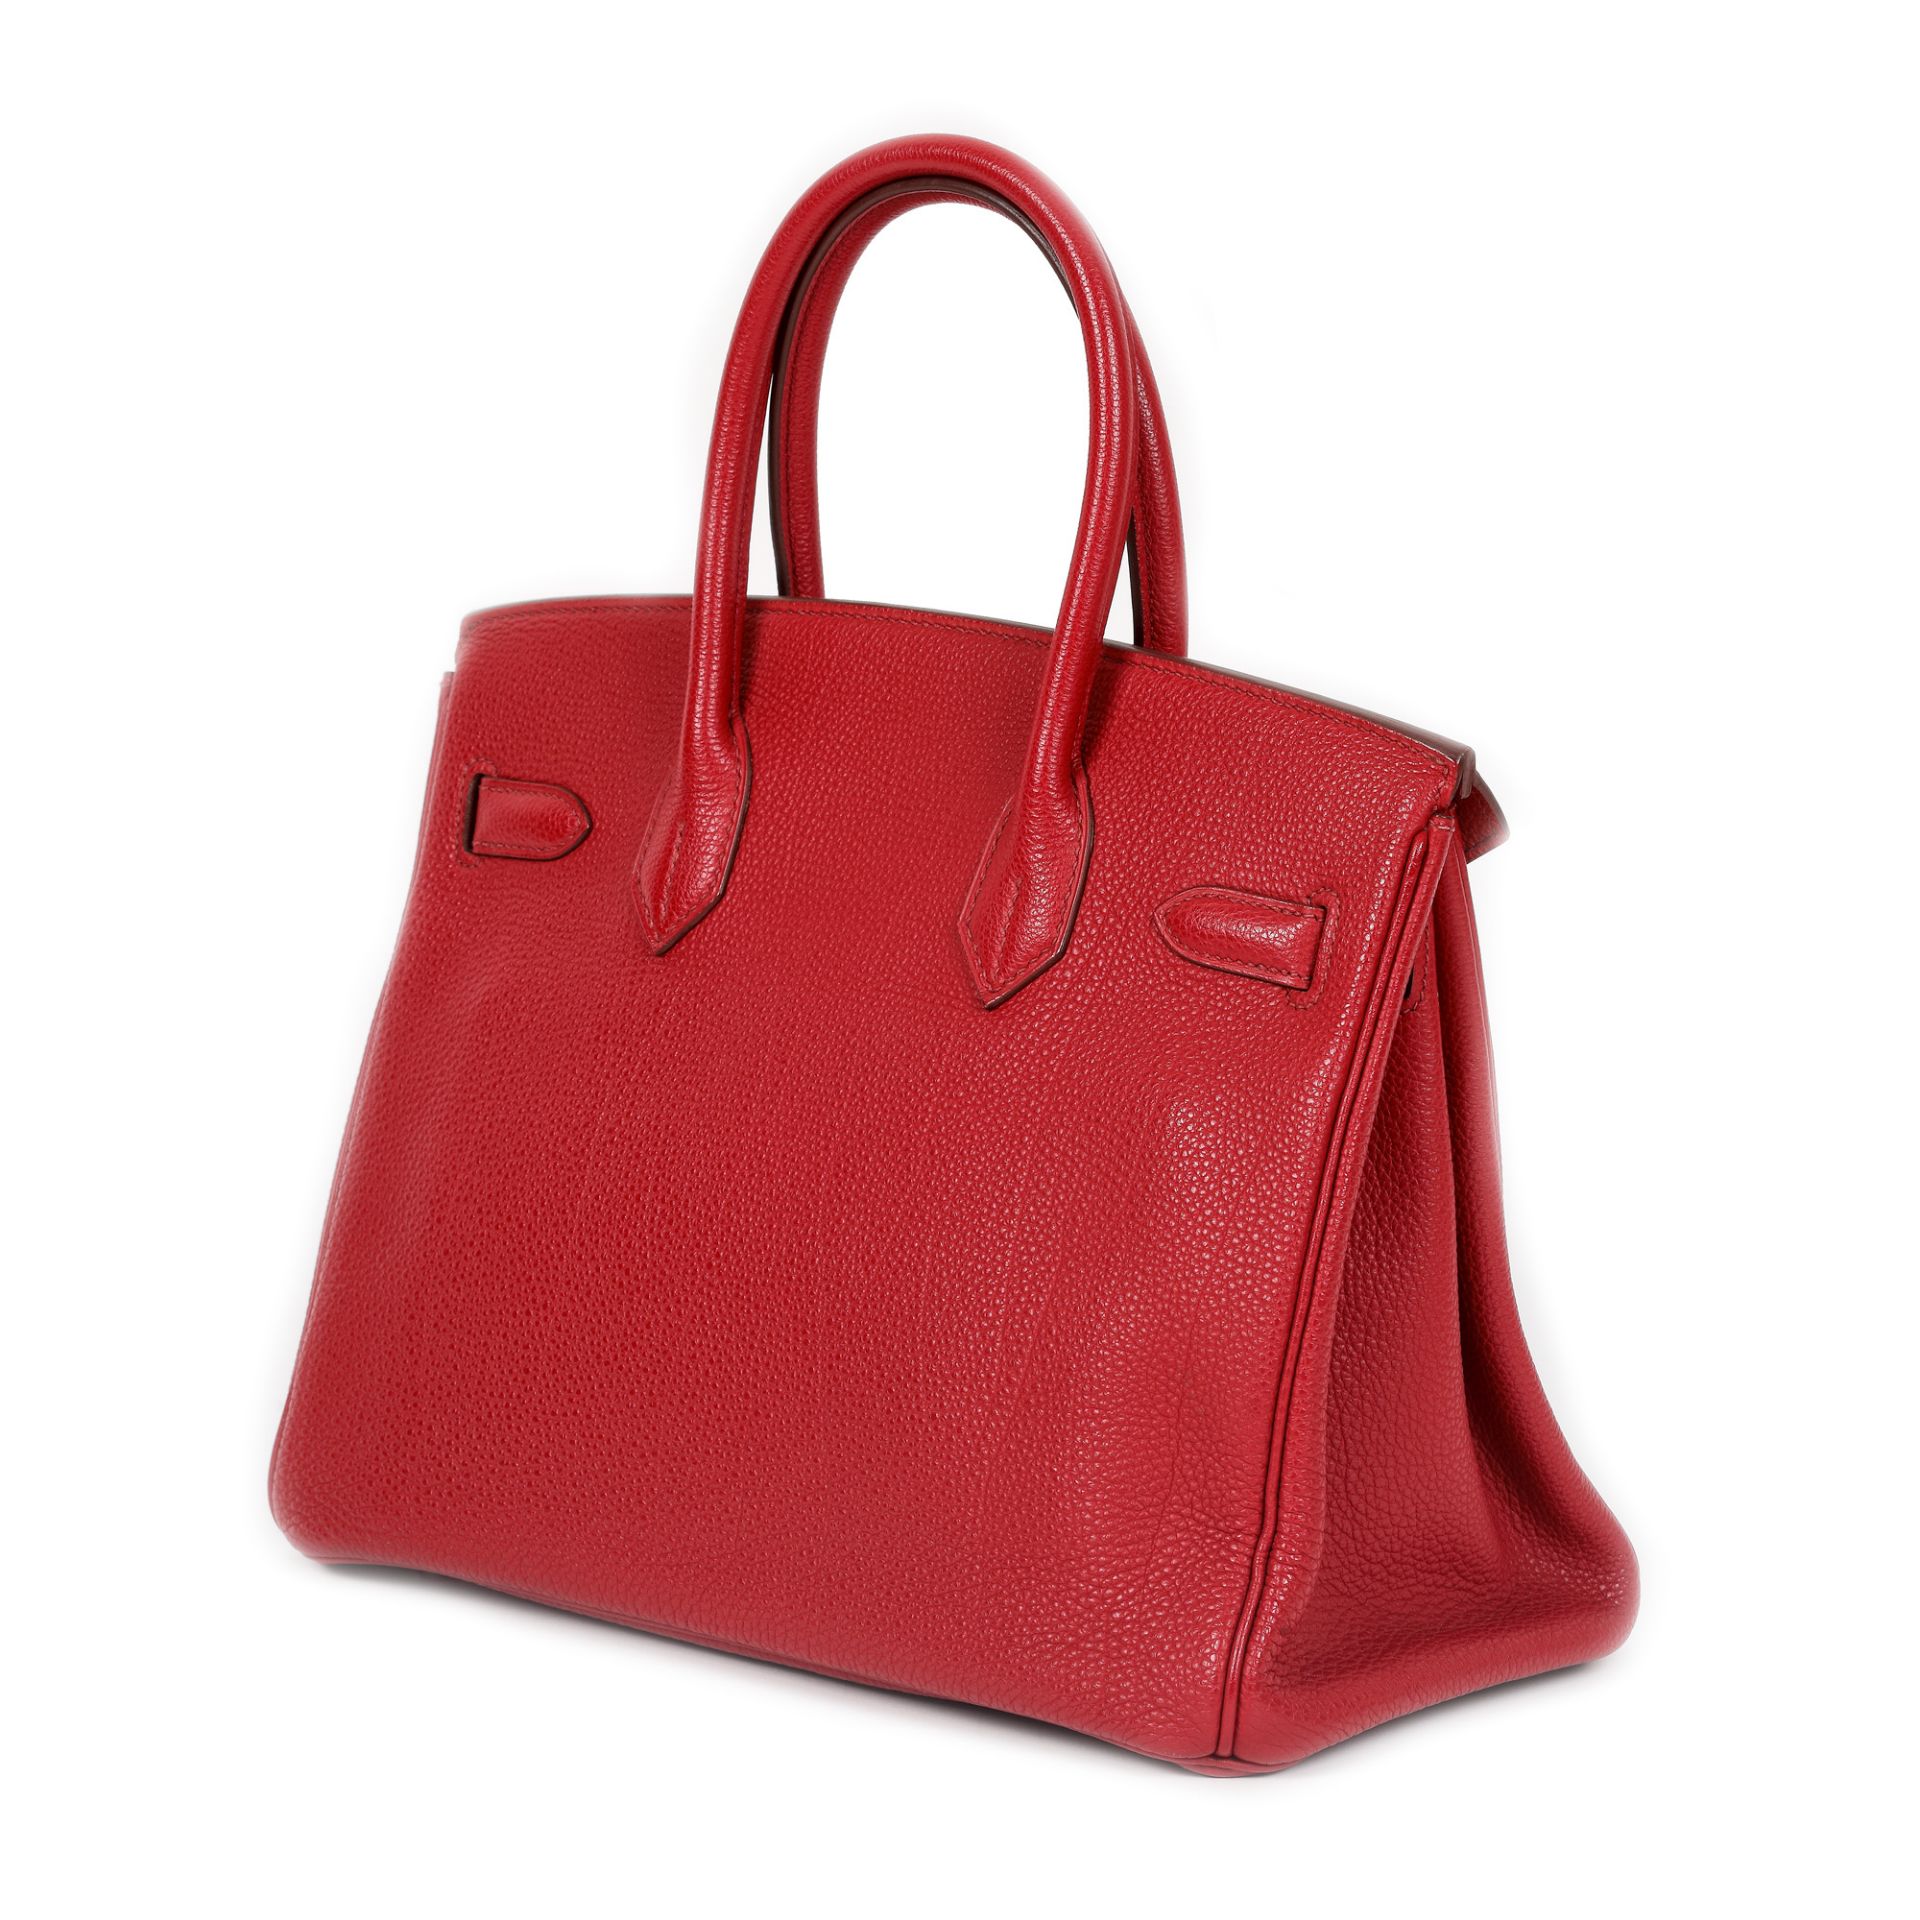 "Birkin 40" - Hermès bag, Togo leather, Rouge Casaque colour - Image 3 of 5